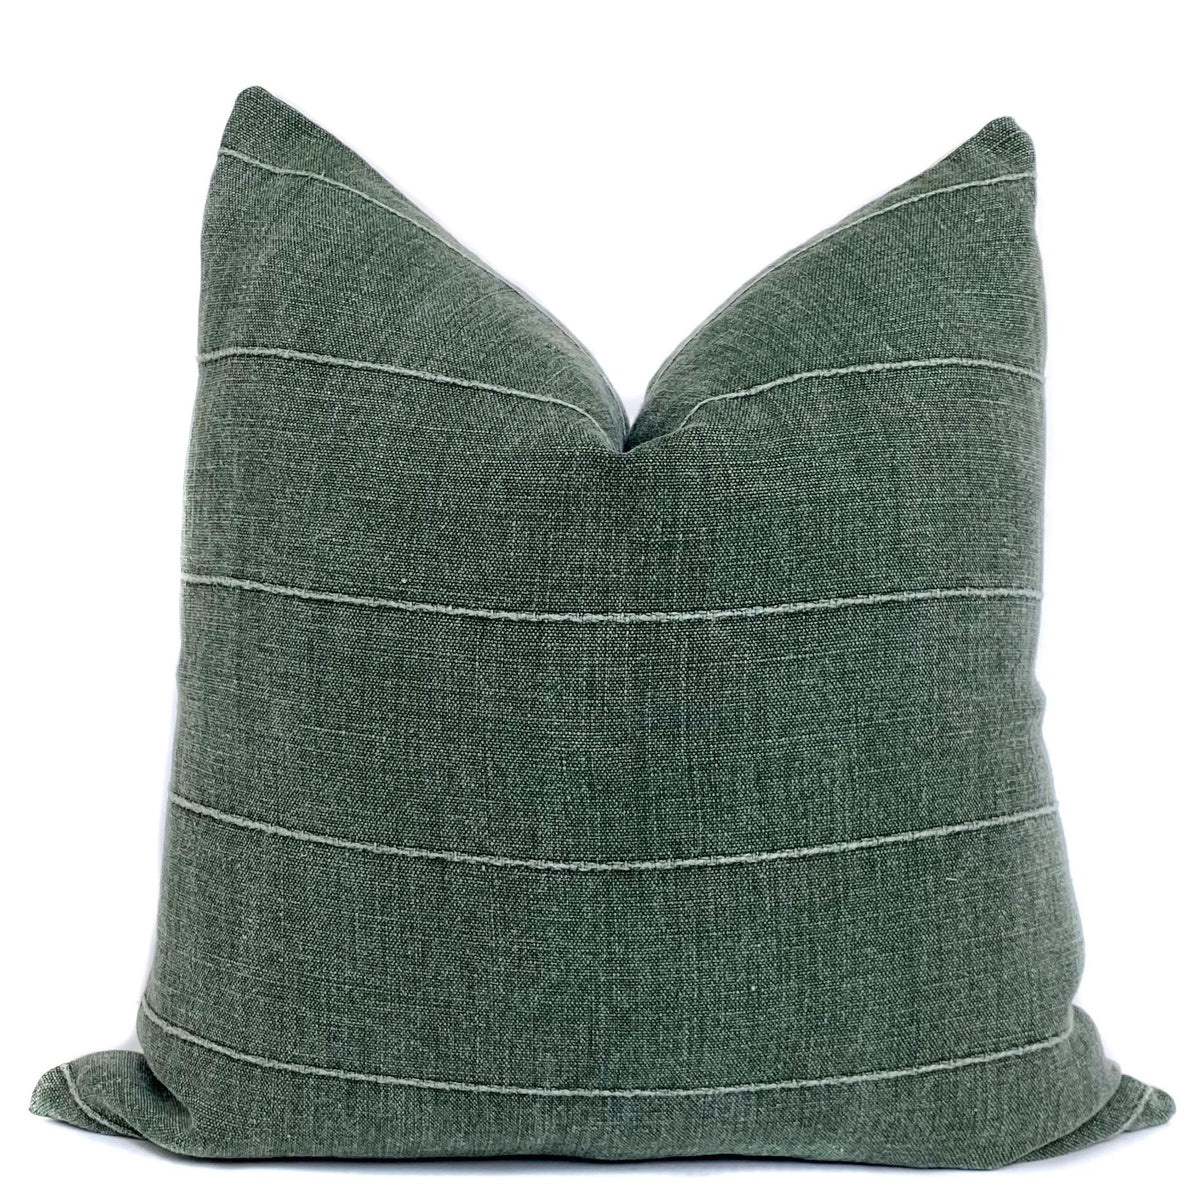 Vintage Green Designer Pillow Cover